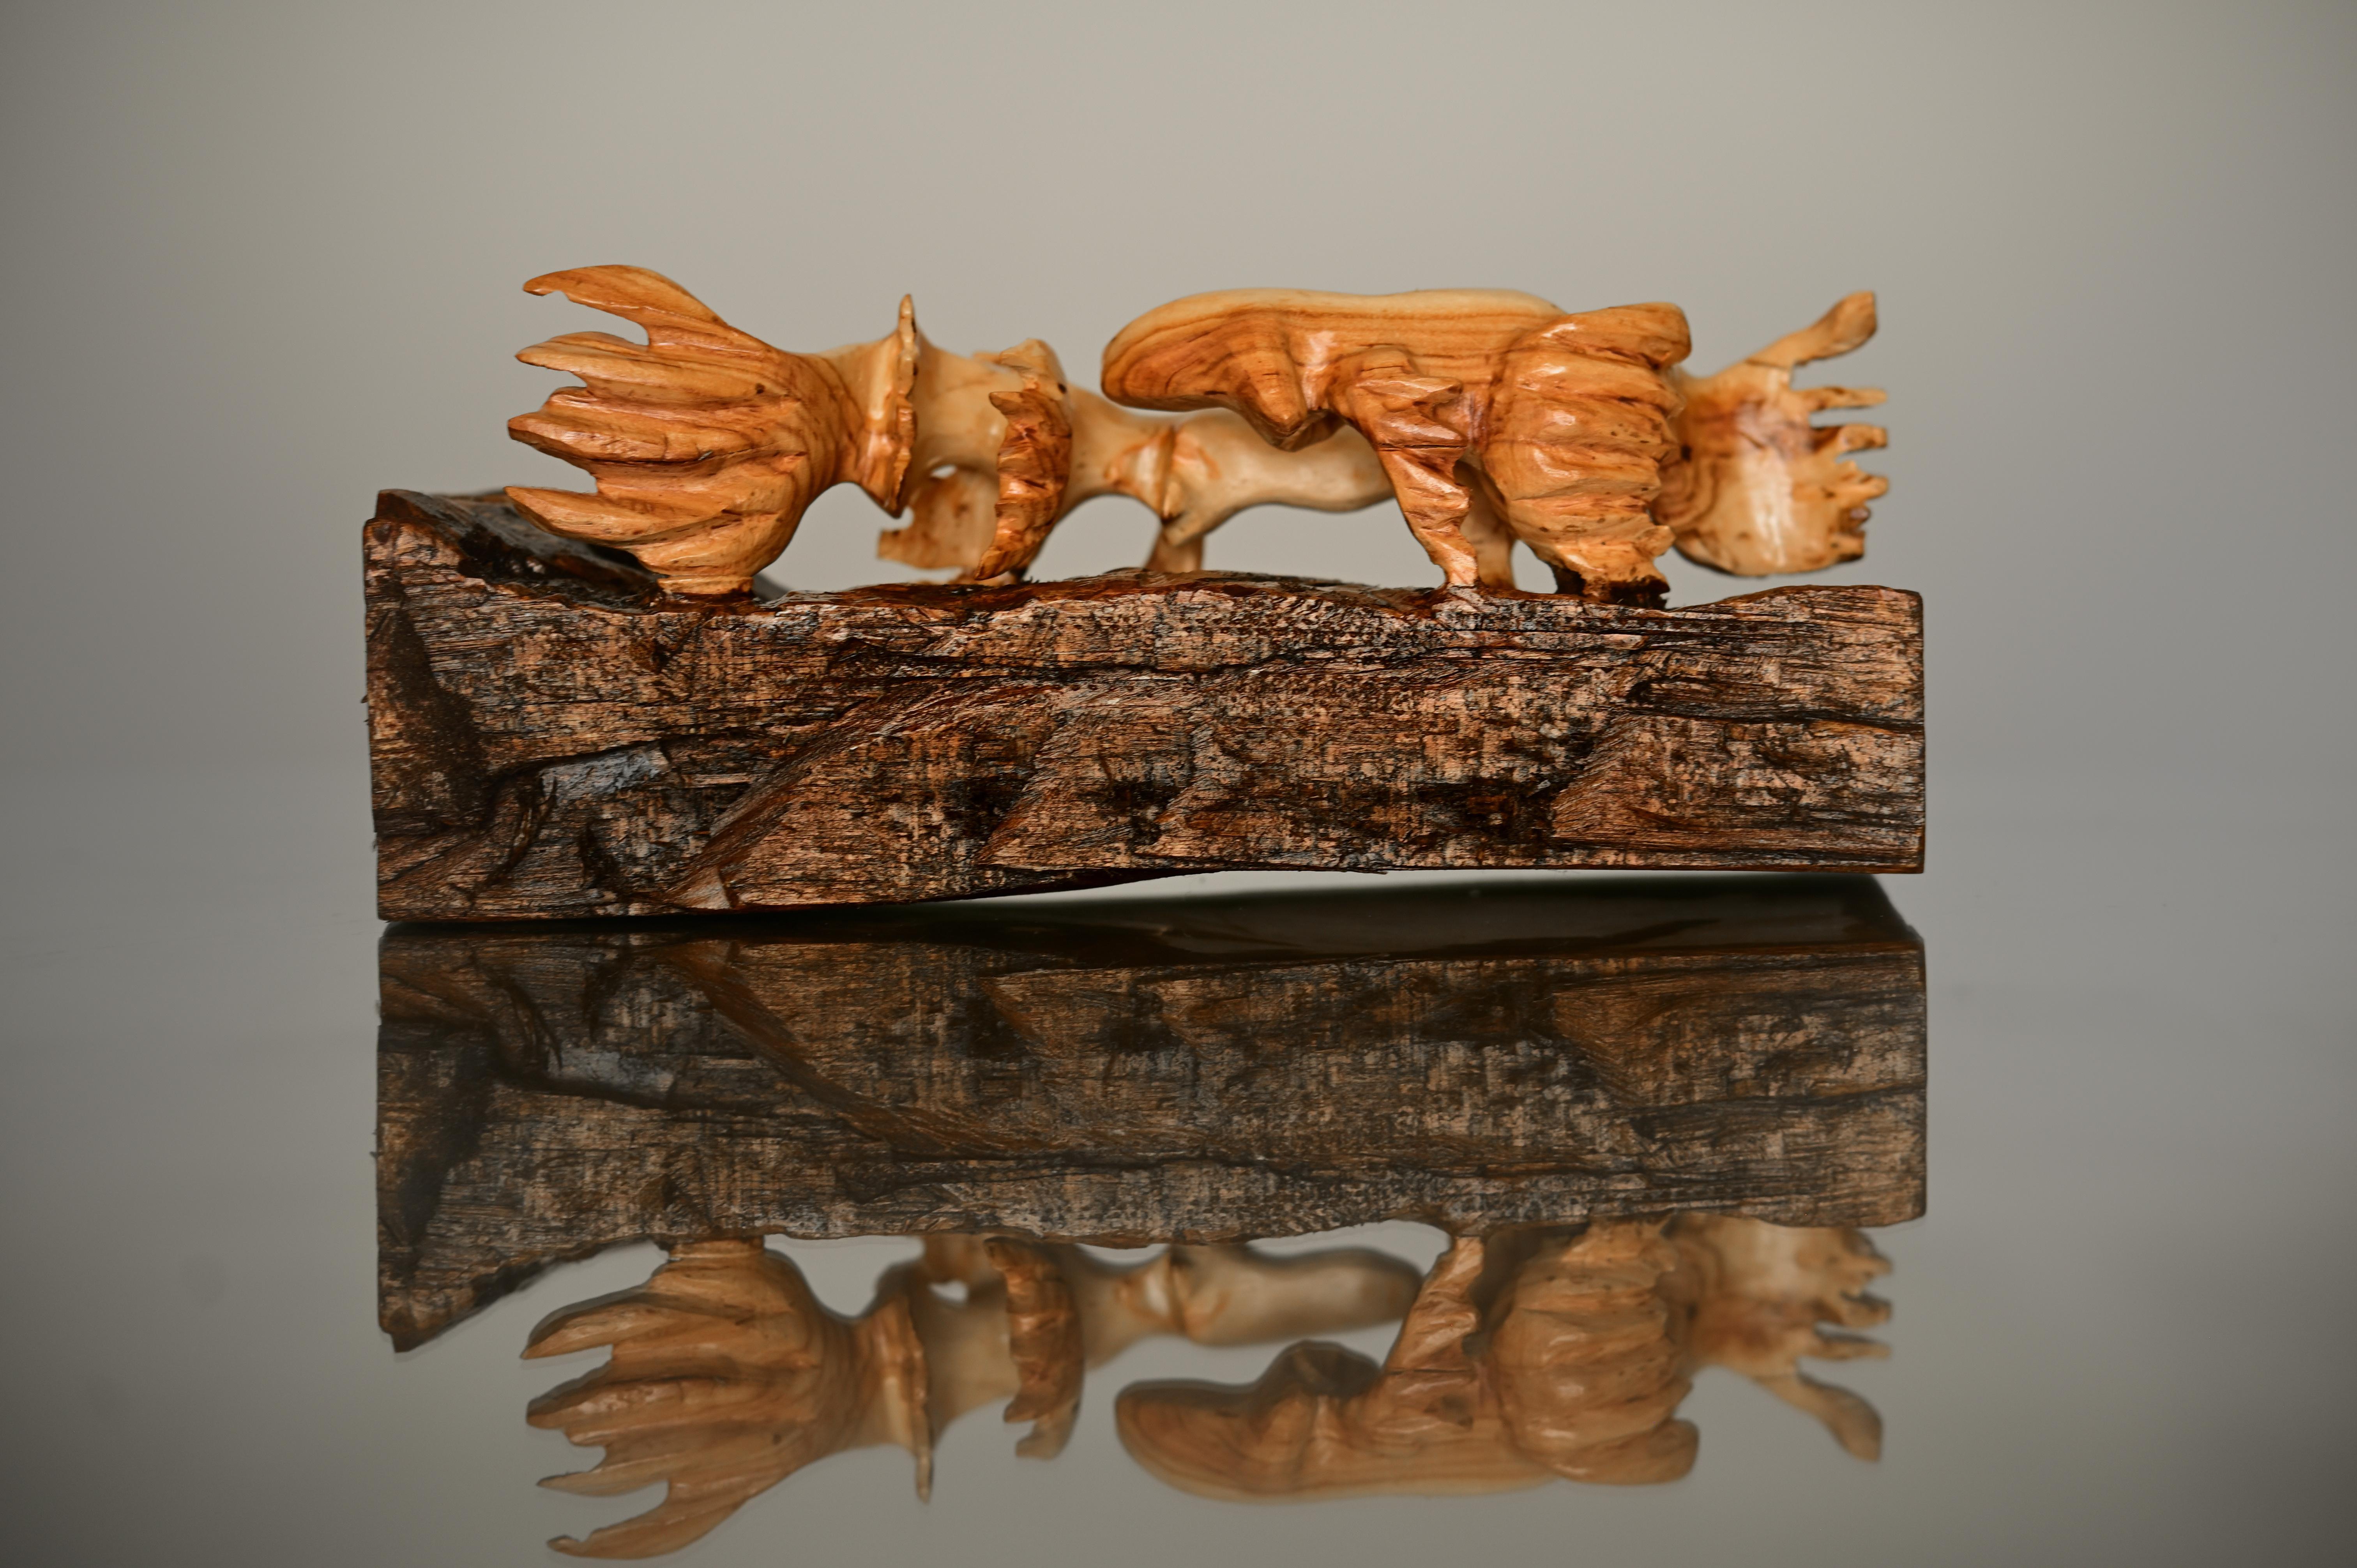 Mike Jorgensen Figurative Sculpture - beta fish synchronized, Original Naturalistic Wood Sculpture